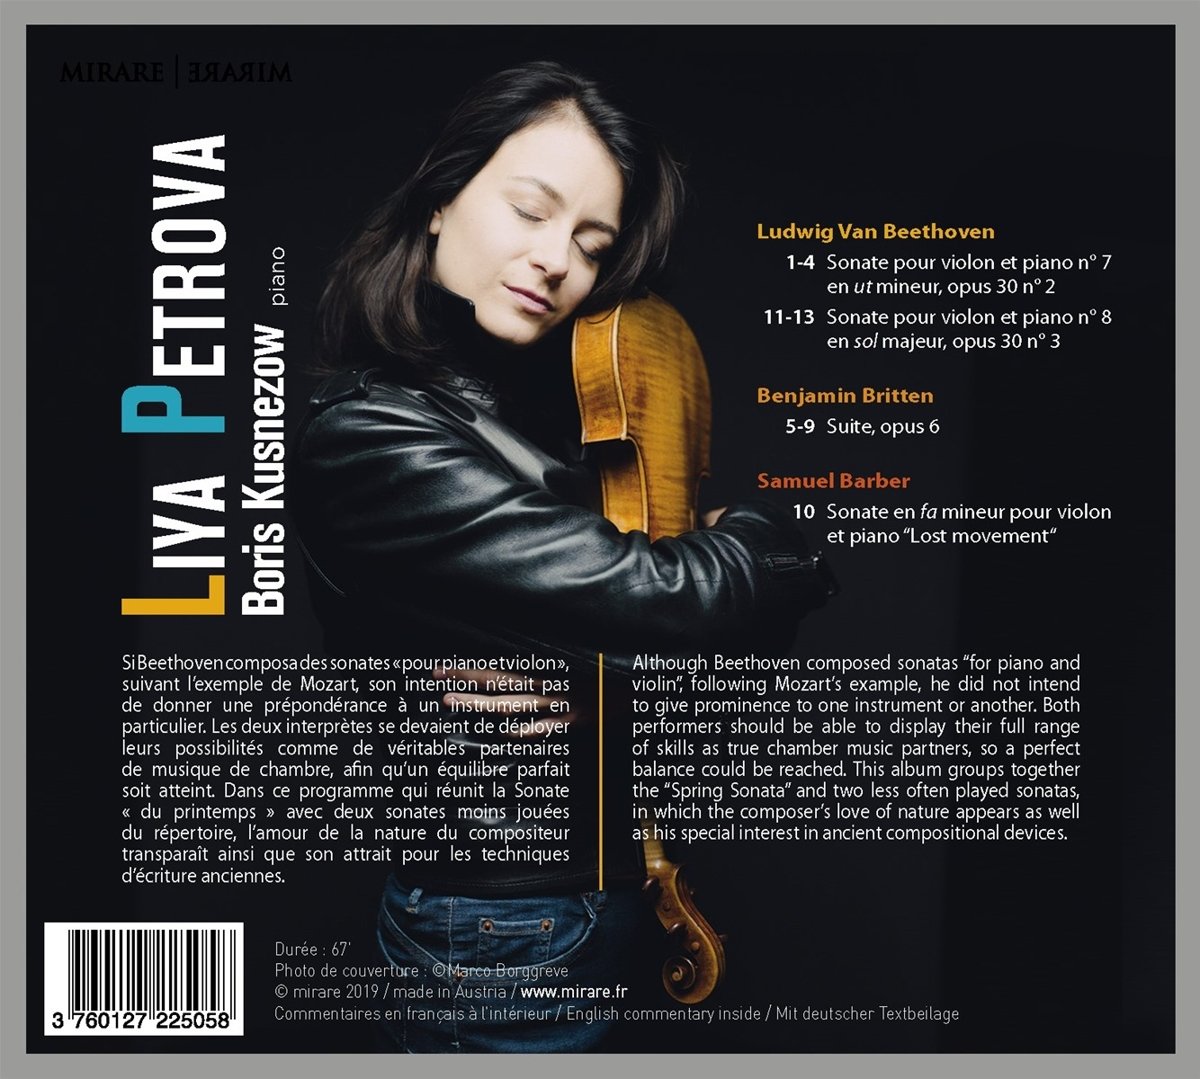 Liya Petrova 베토벤 / 브리튼 / 바버: 바이올린 소나타 (Beethoven / Britten / Barber: Violin Sonatas)